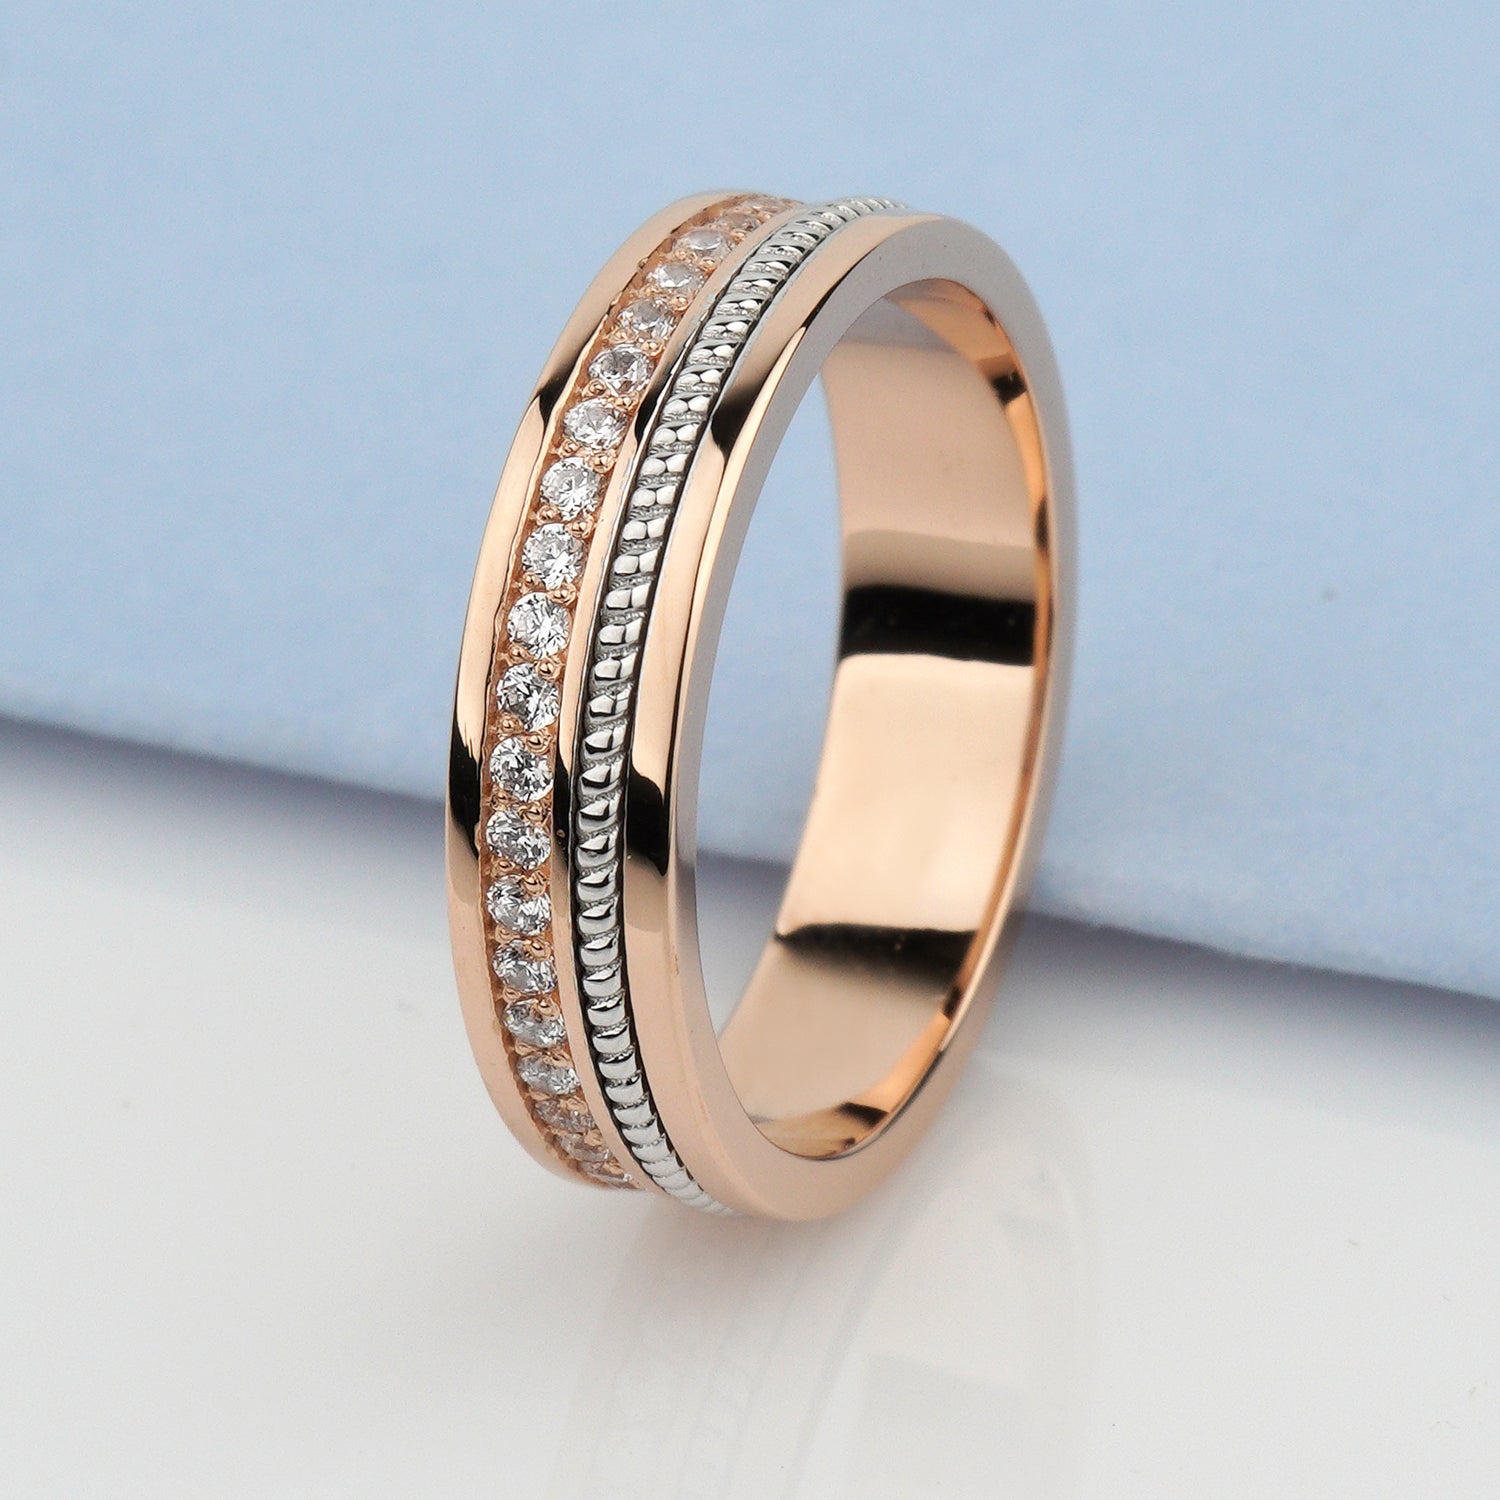 Women's wedding bands. Wedding rings for women. Bridal rings